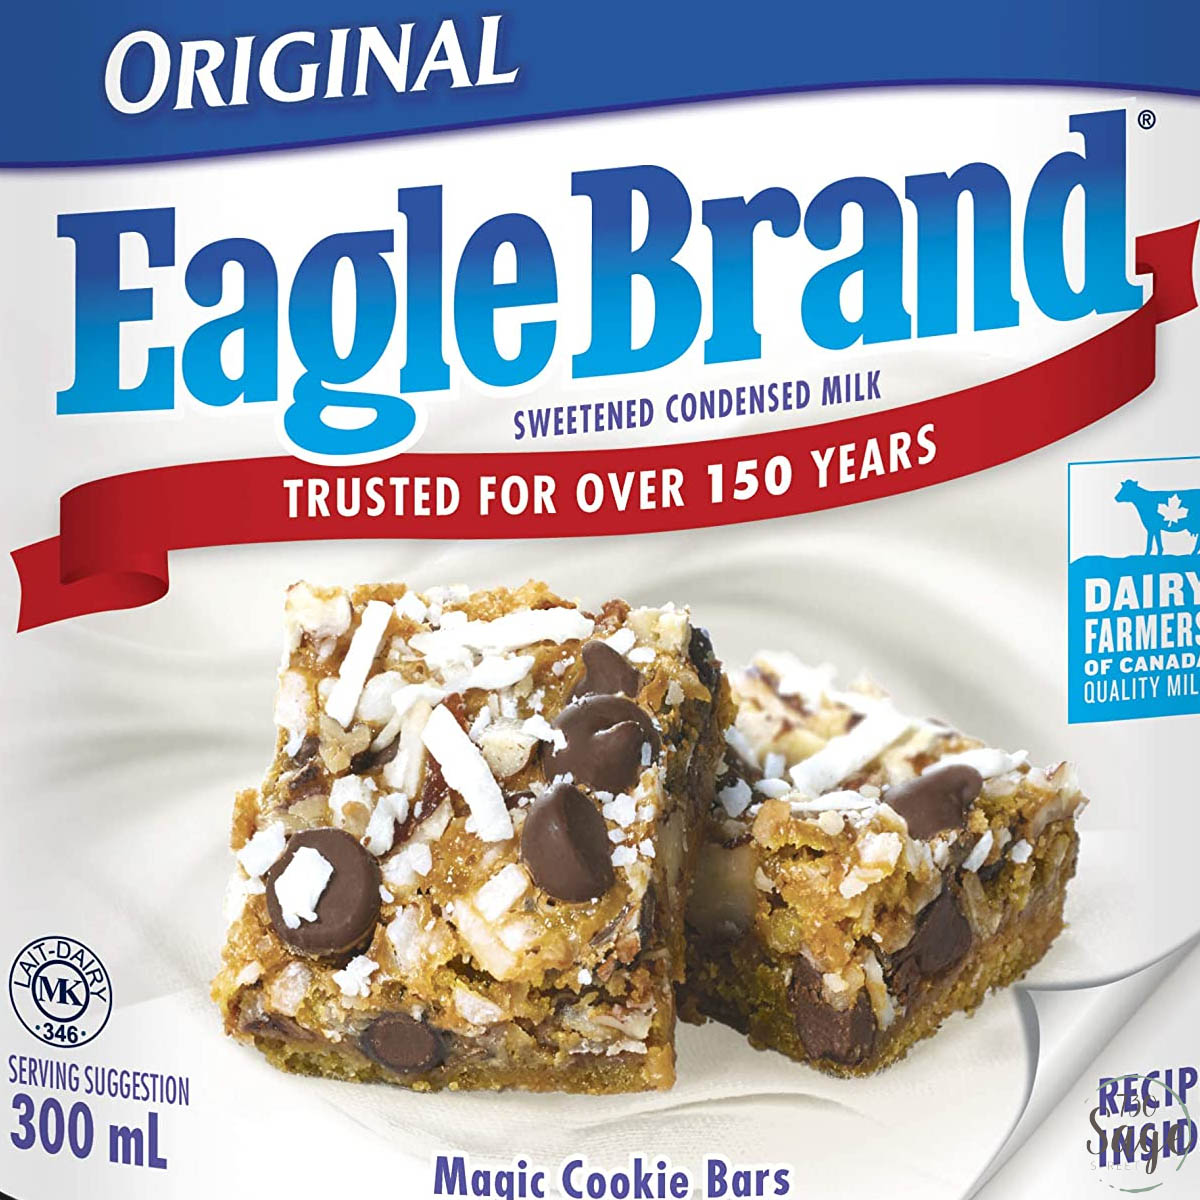 Eagle Brand Recipes